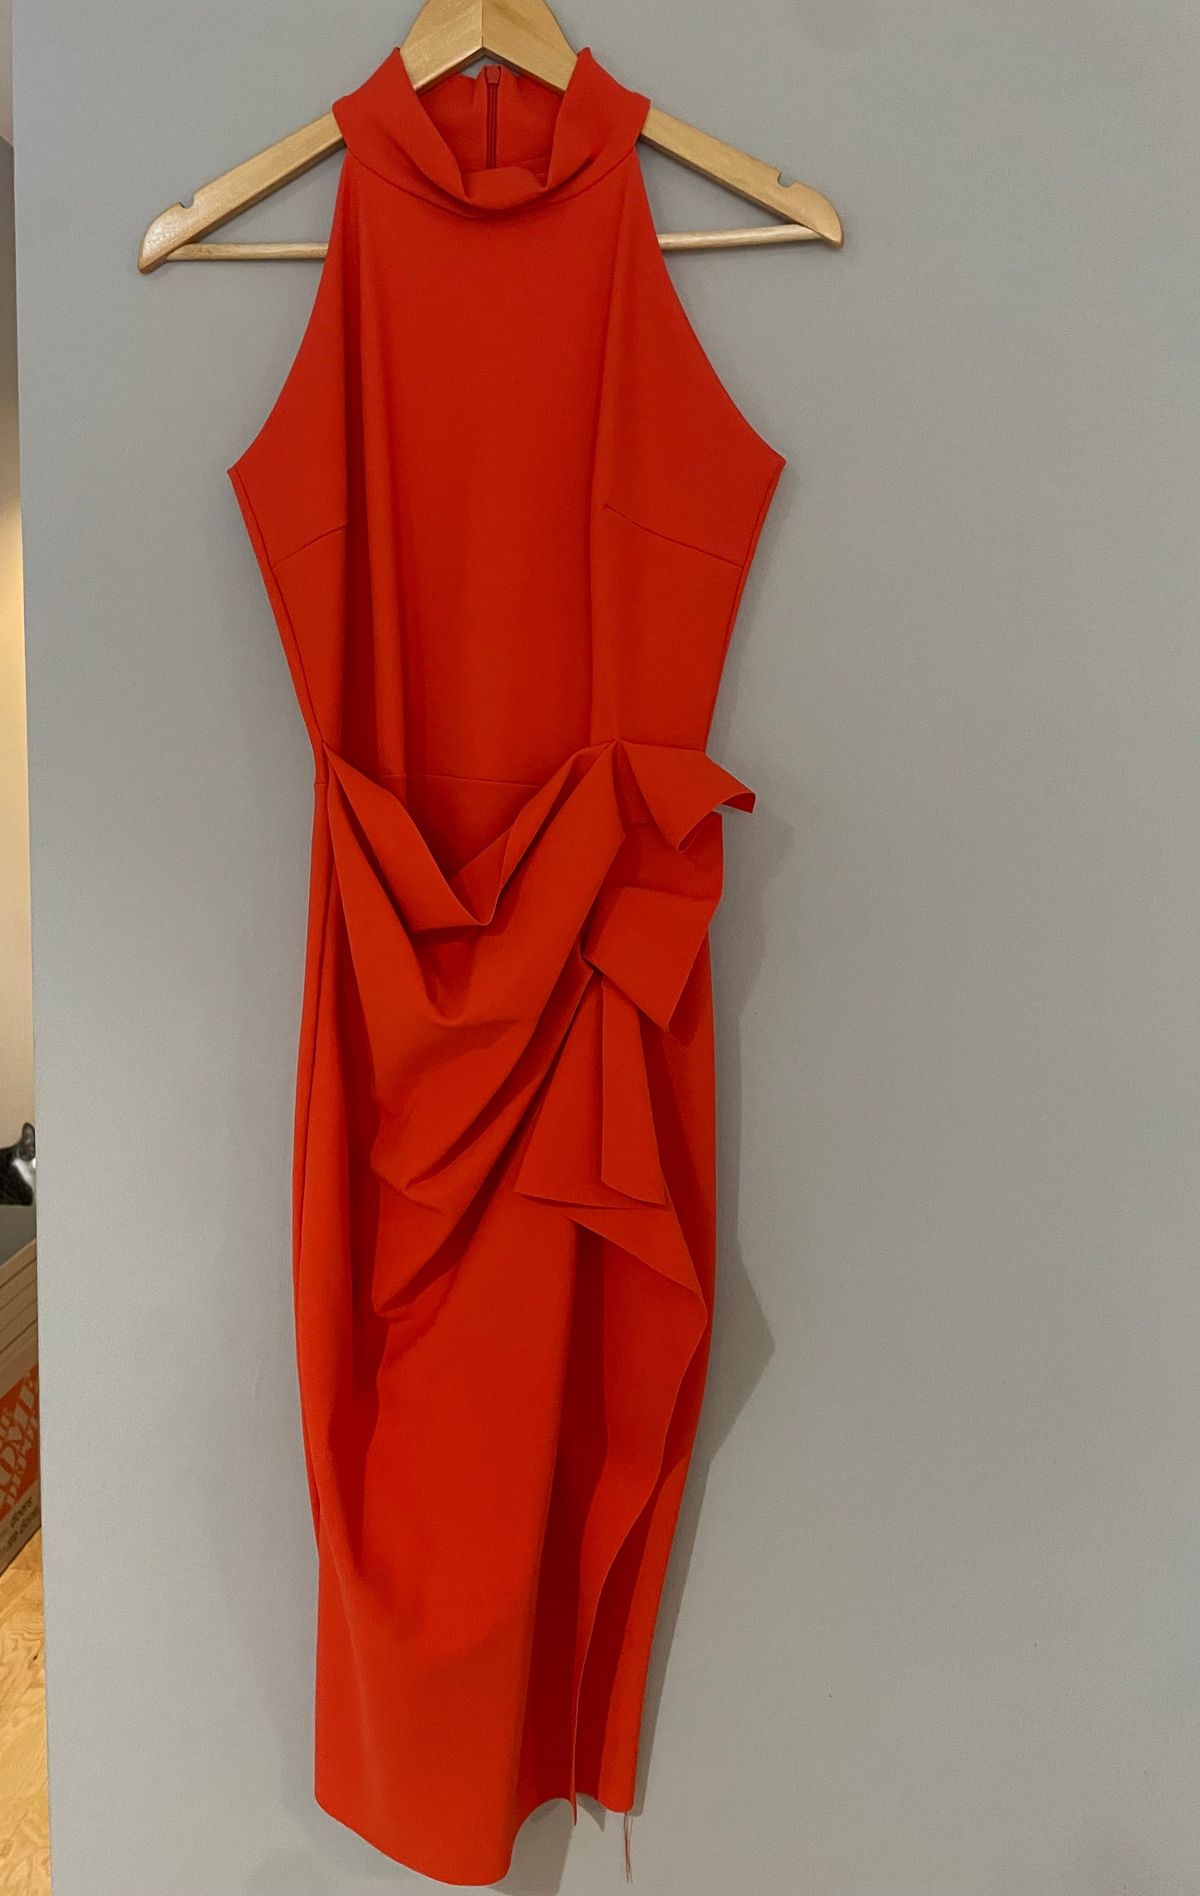 Size 6 High Neck Orange Cocktail Dress on Queenly